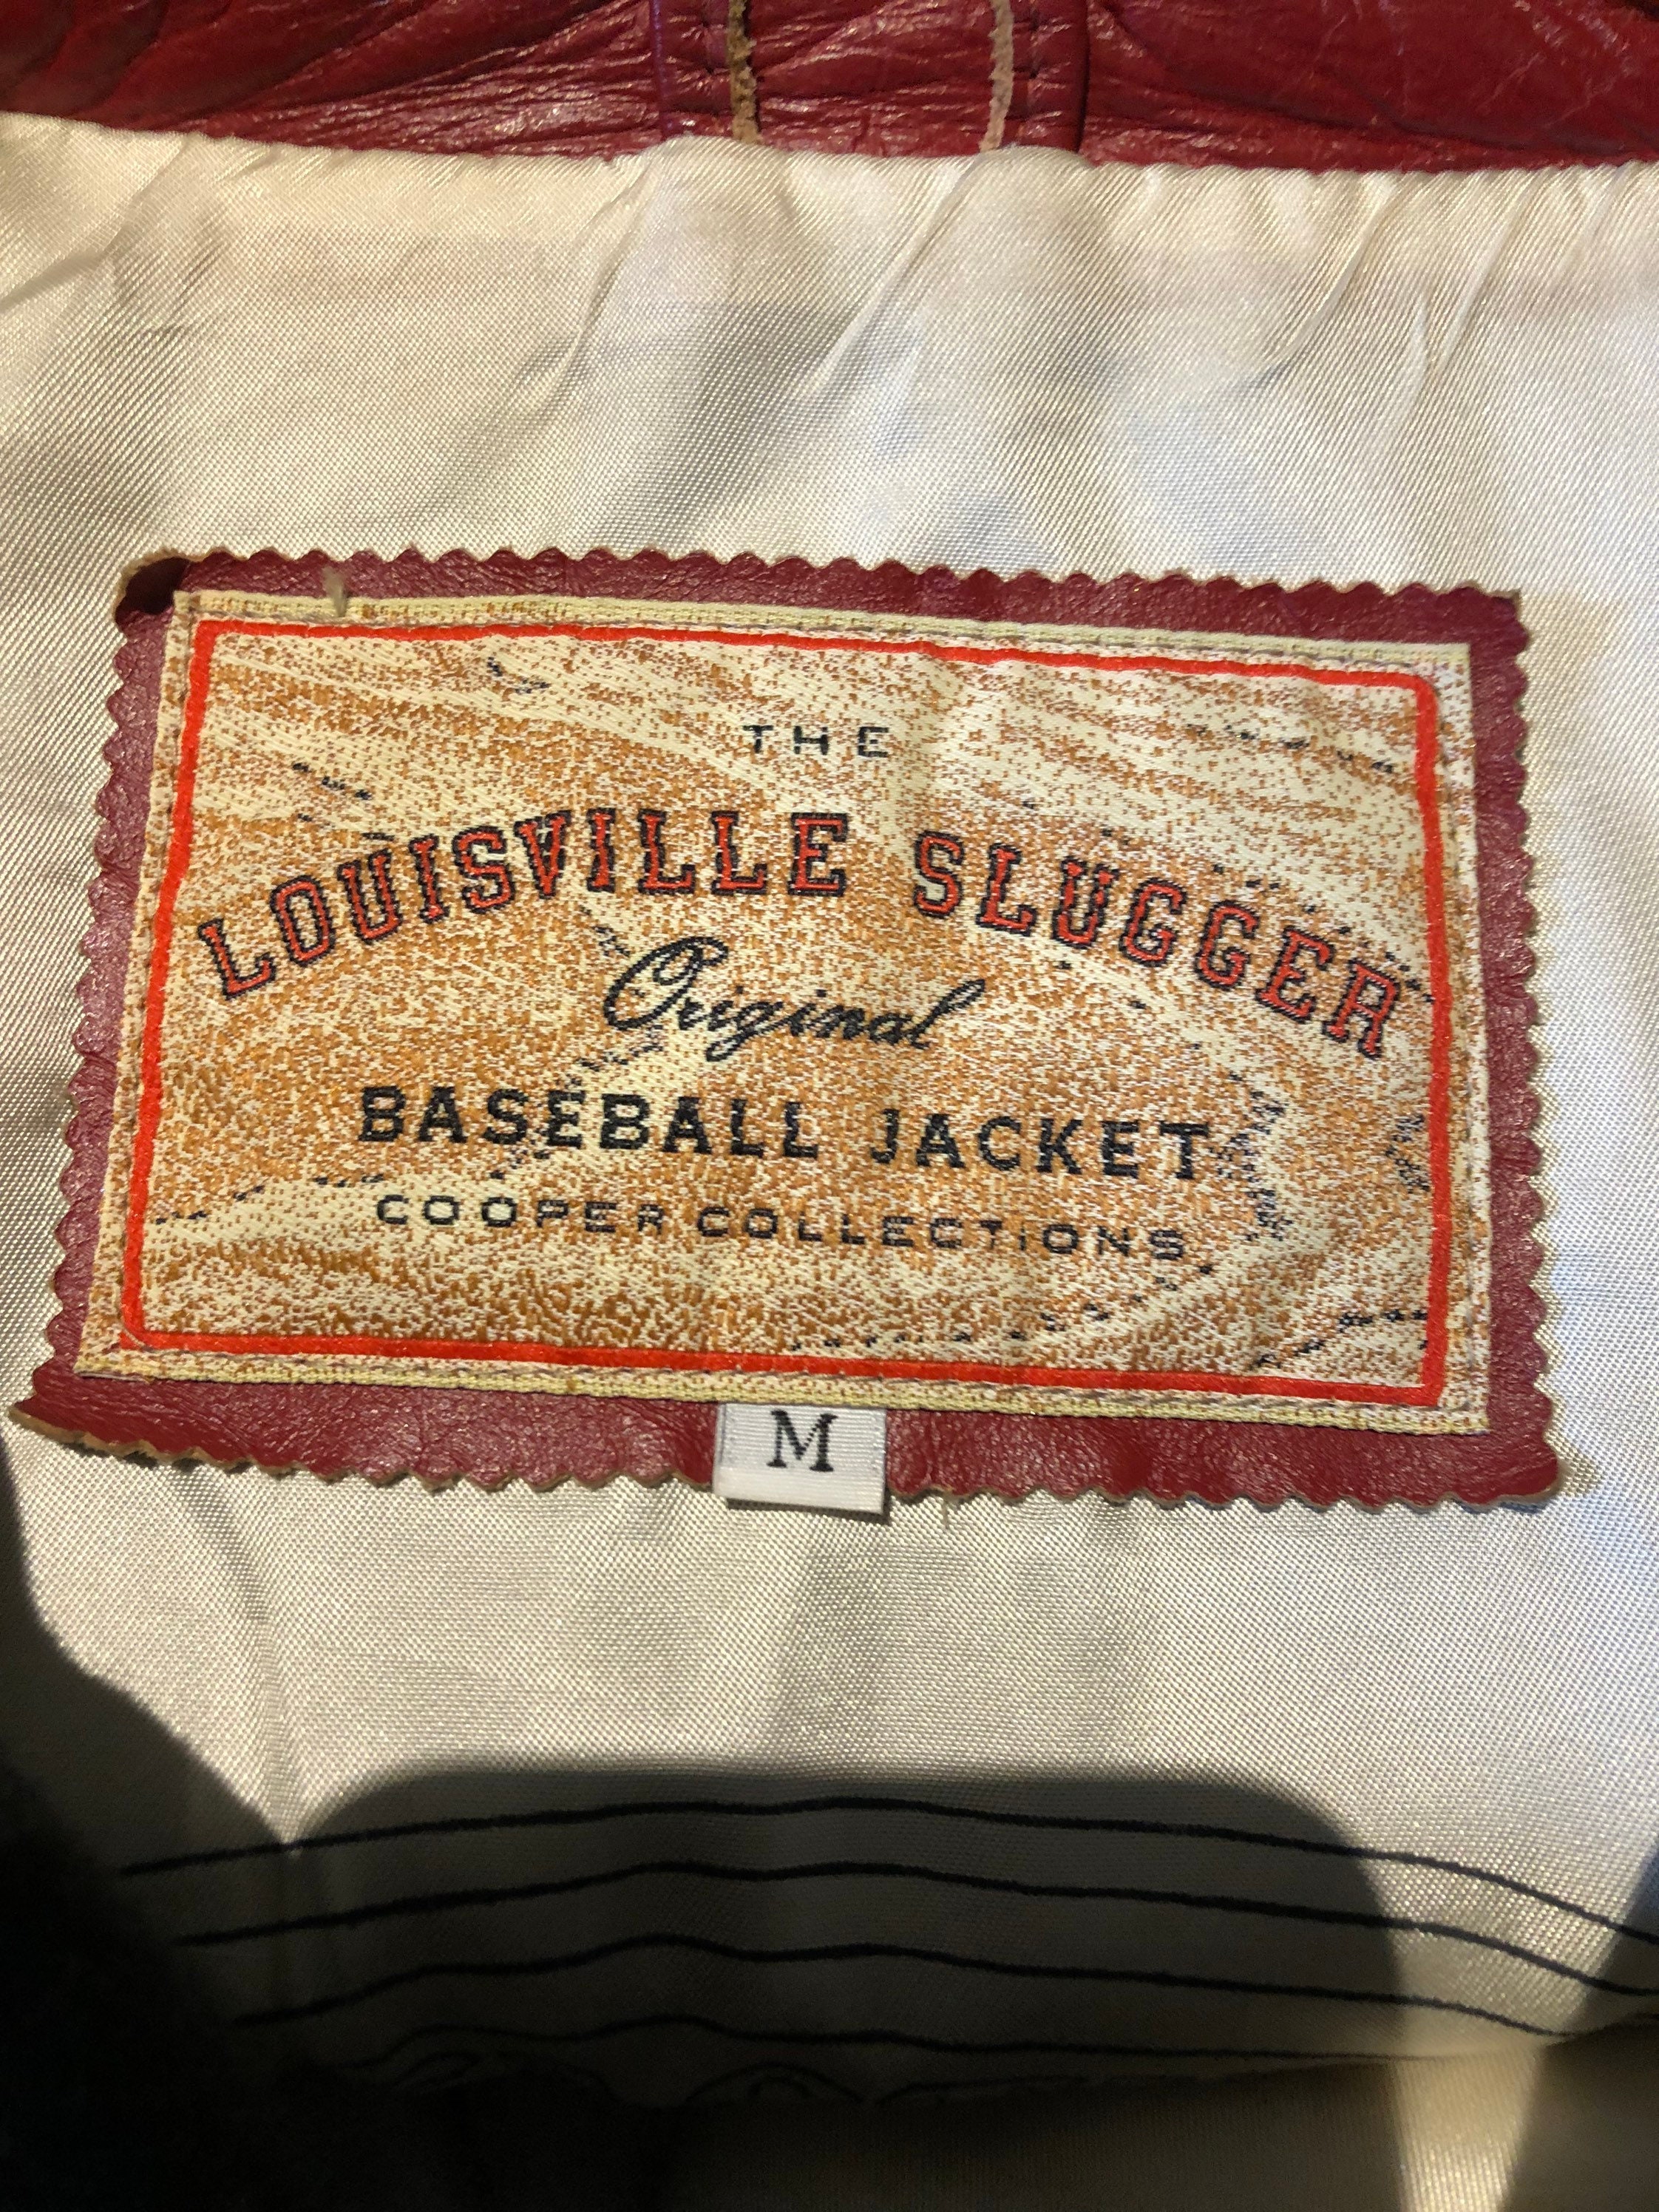 BombshellVintagePDX Vintage Varsity Baseball Jacket / 1990s Louisville Slugger Cooper Original Leather & Wool Bomber Jacket / Hillerich Bradsby Collectible